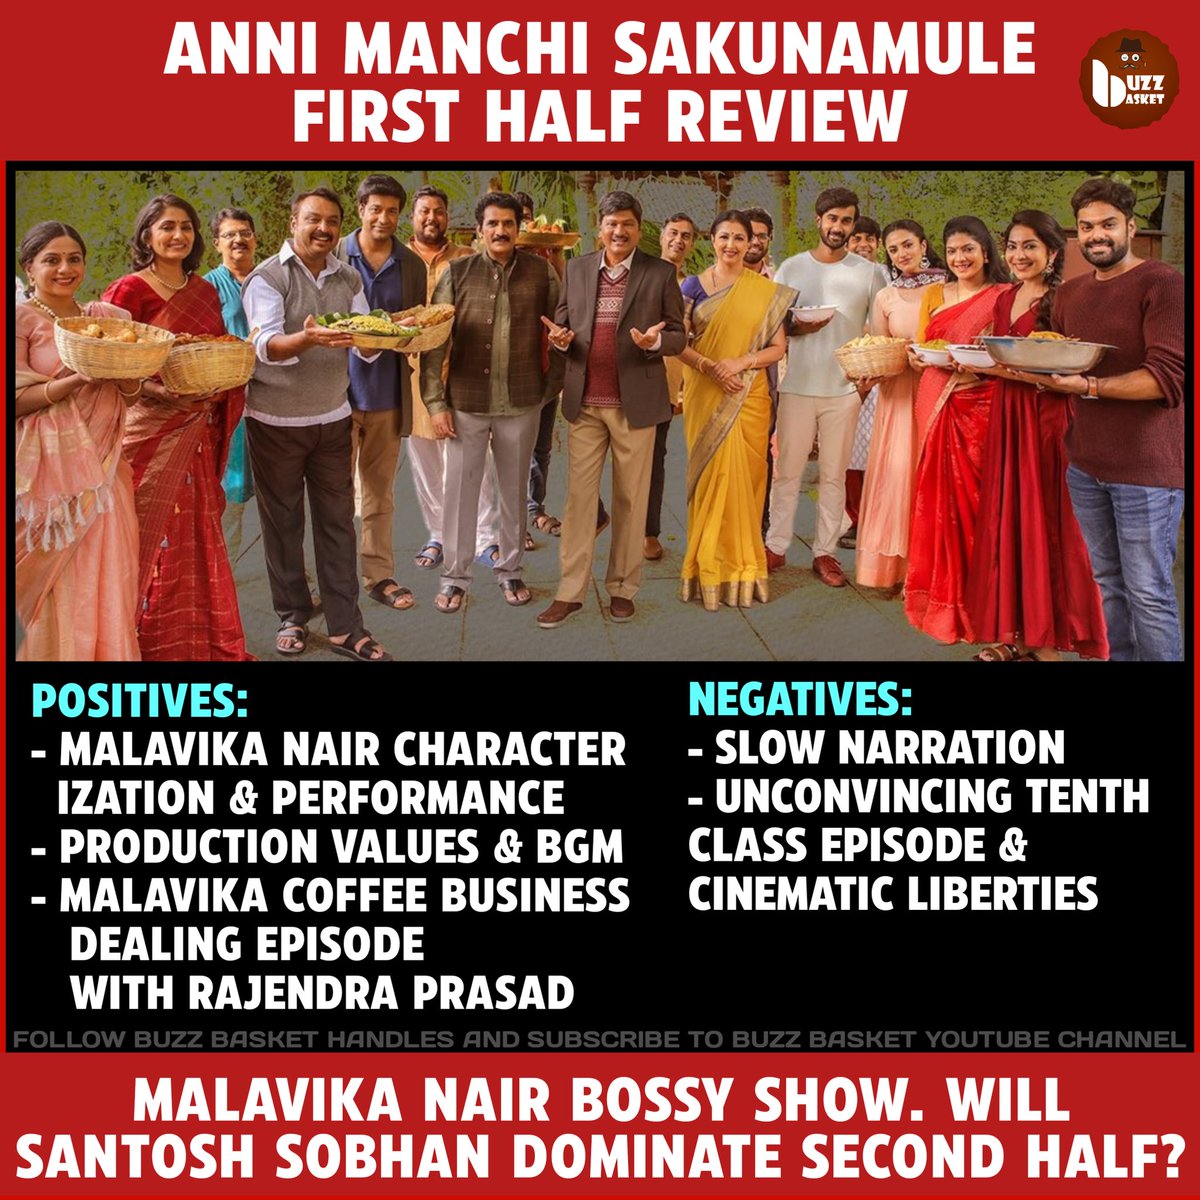 #SantoshSobhan and #MalavikaNair's #AnniManchiSakunamule First Half Review 

#AnniManchiSakunamuleReview